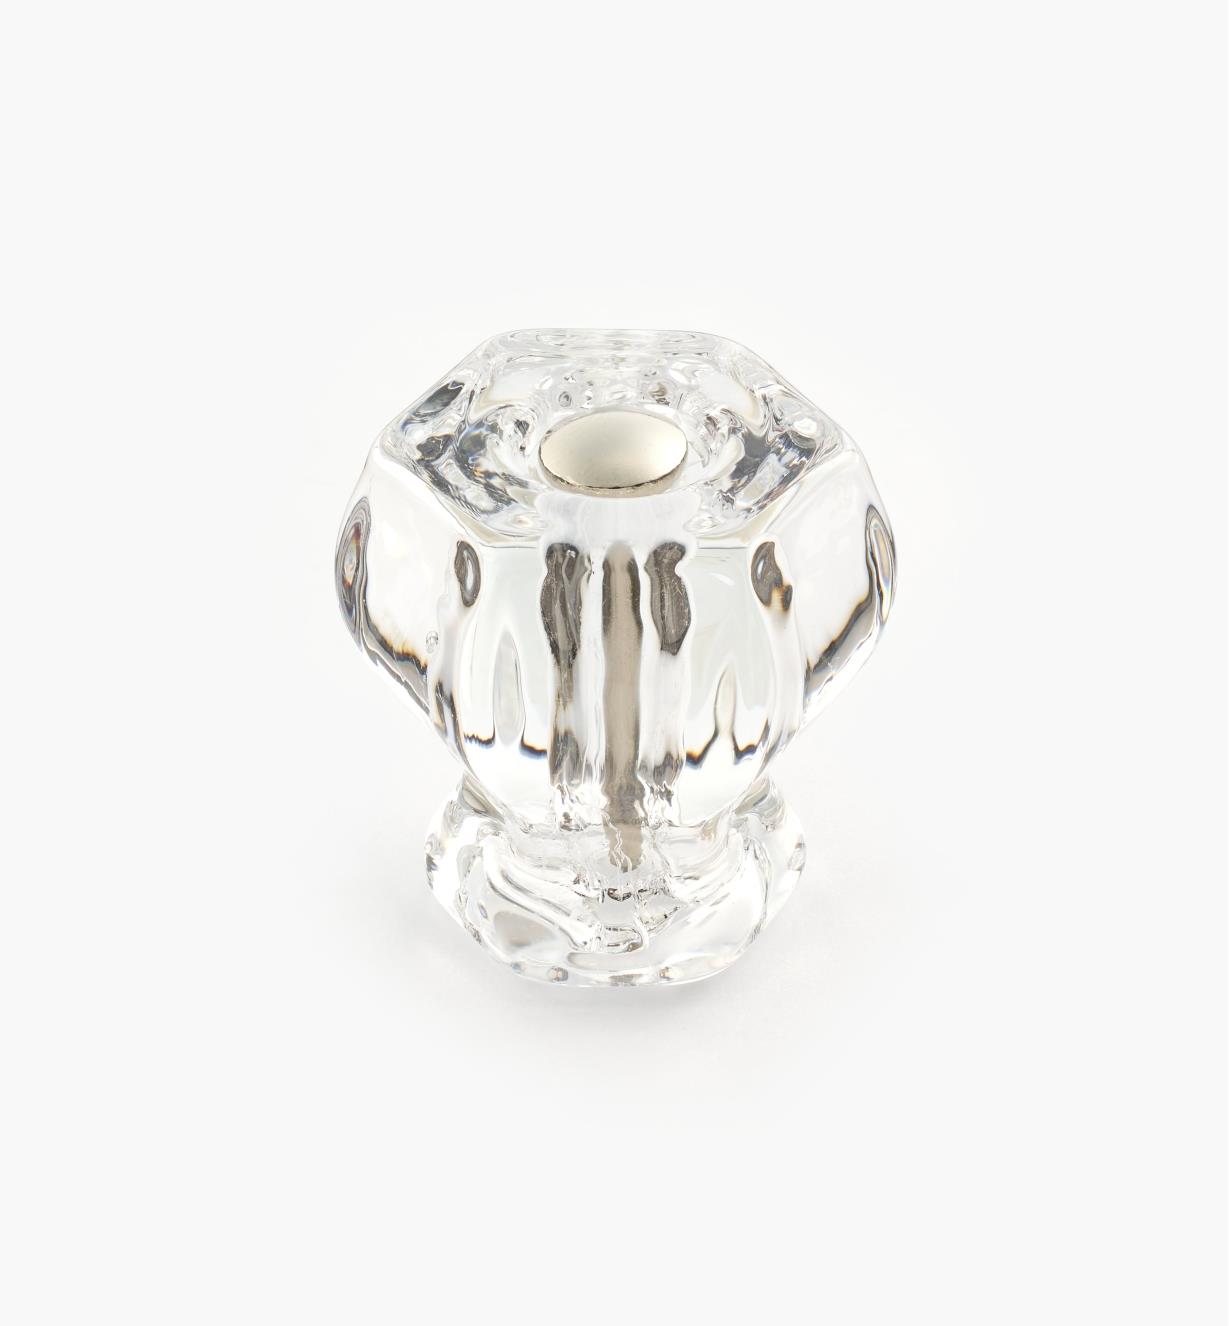 01A3710 - 1 1/8" Clear Hexagonal Glass Knob